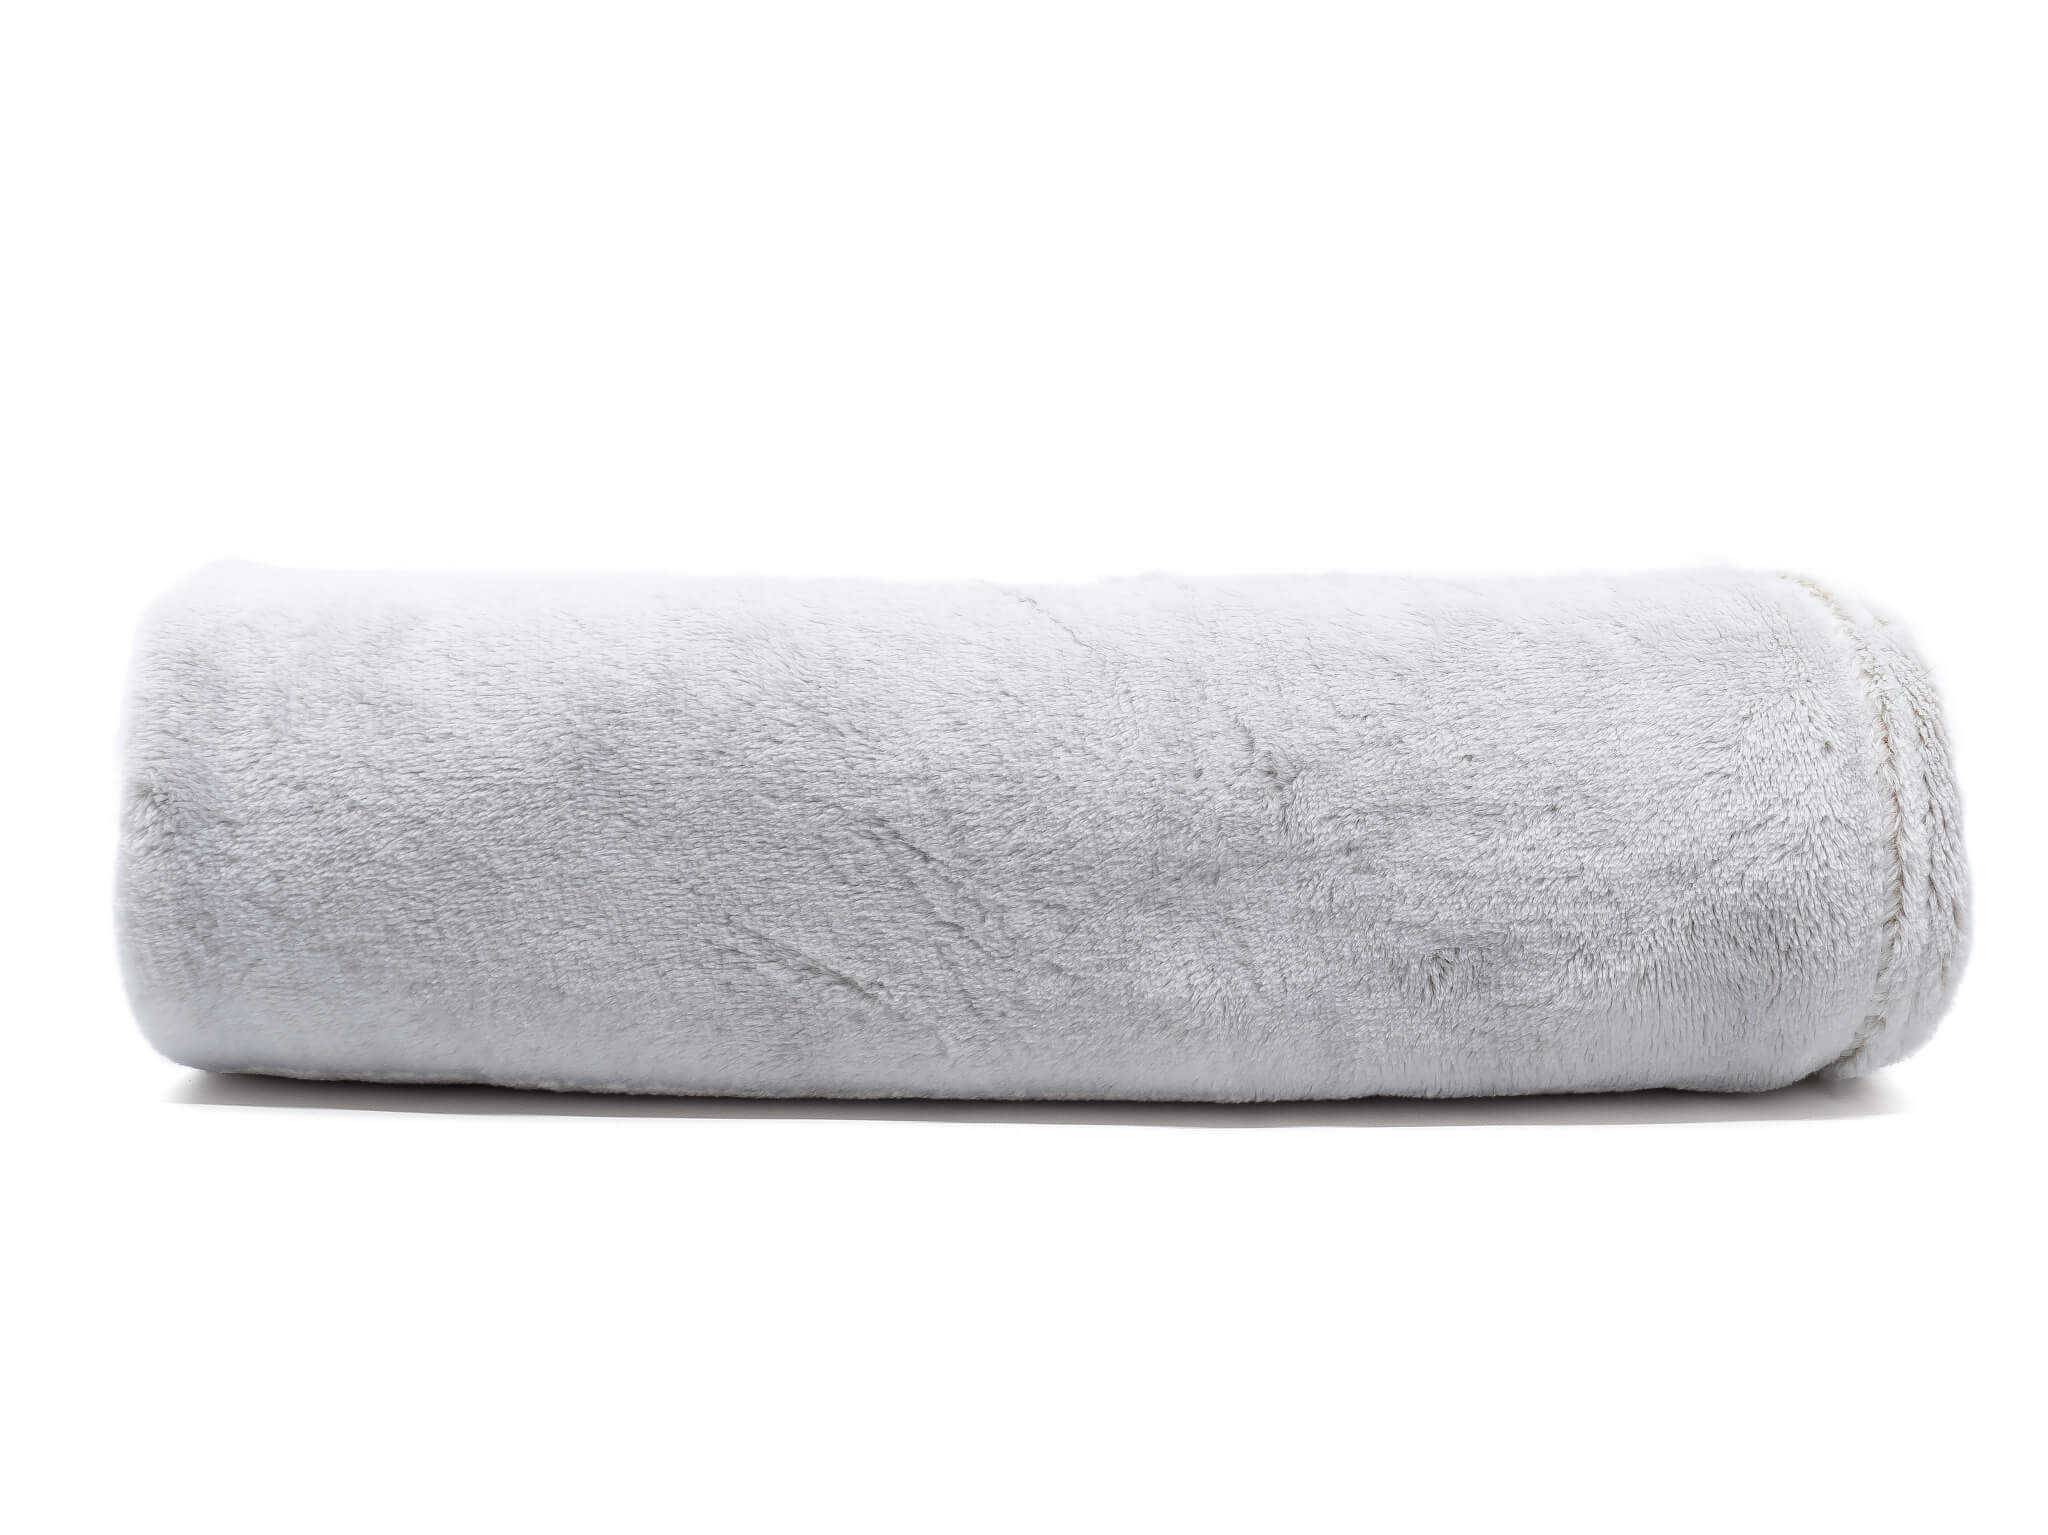 Vsepropejska Ella stříbrná II fleecová deka pro psa Barva: Stříbrná, Rozměr (cm): 100 x 70